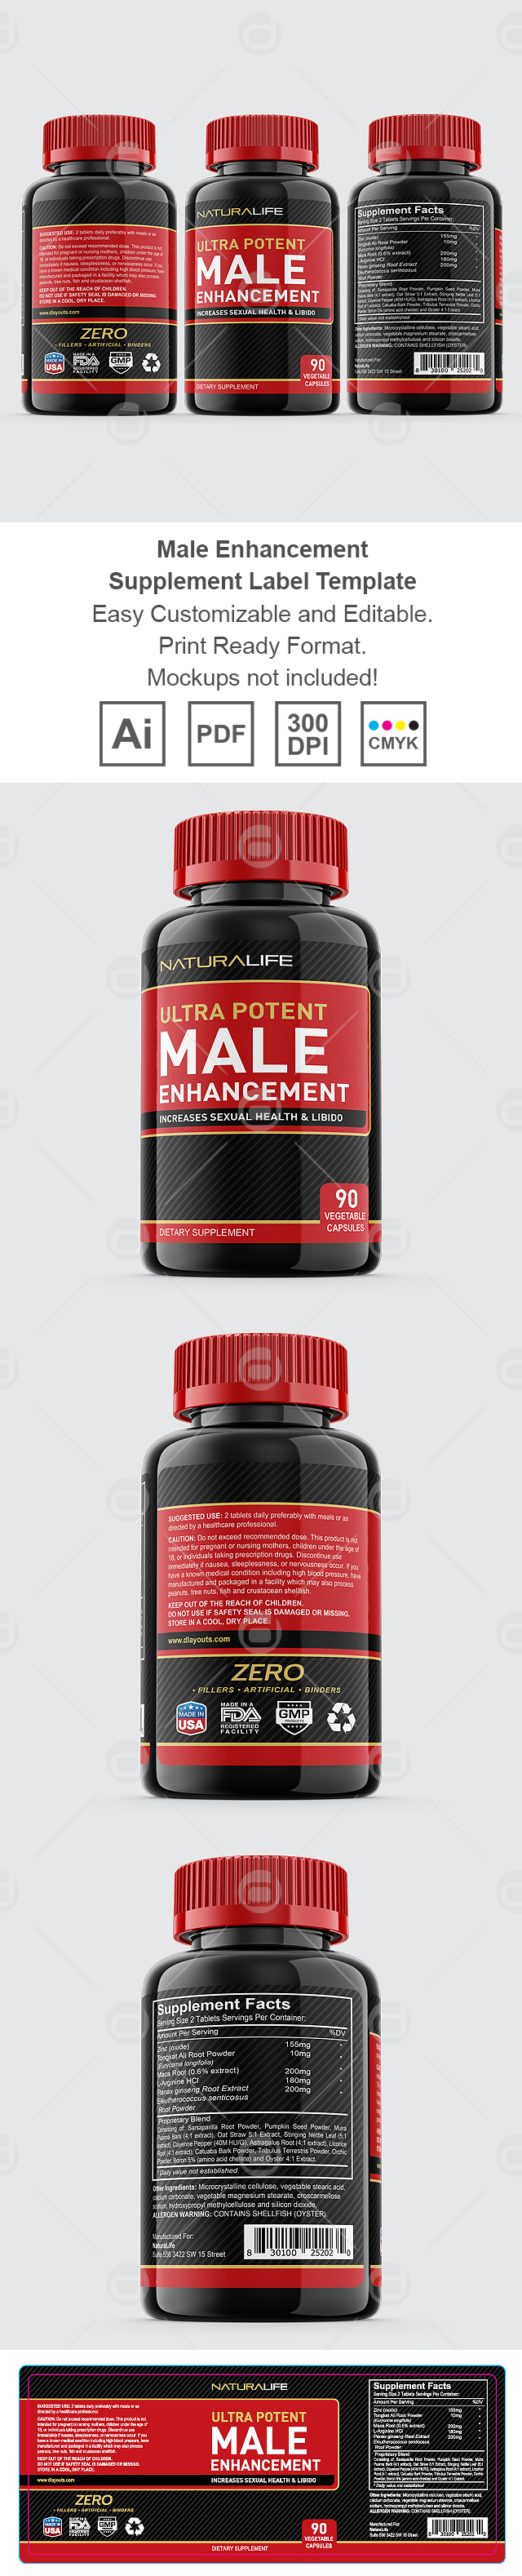 Male Enhancement Supplement Label Template